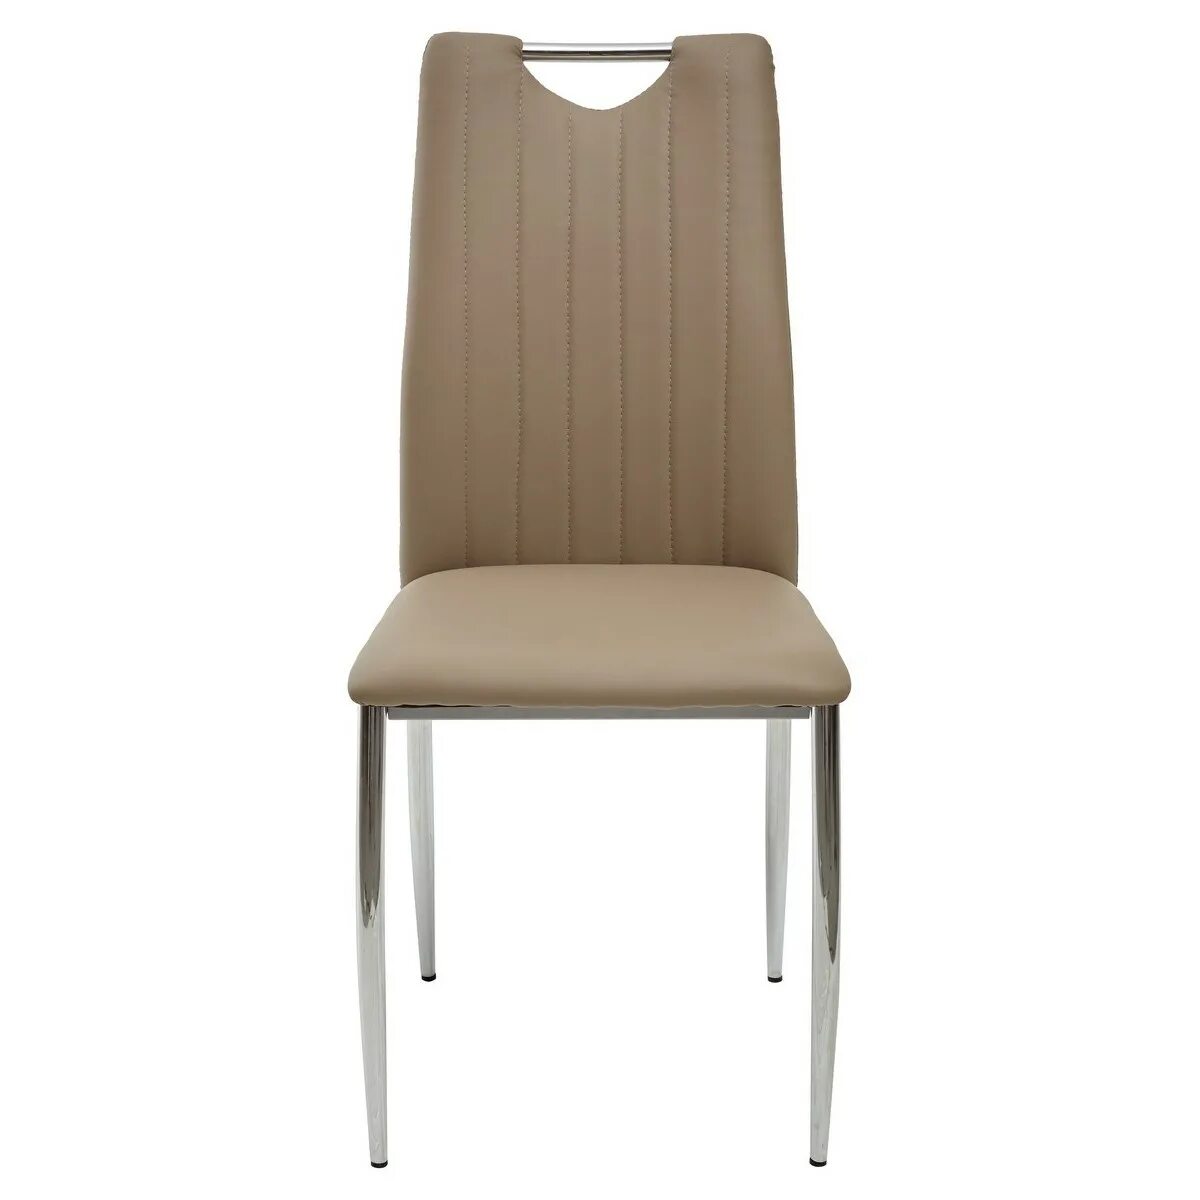 Стул easy. Стул Desert 603 бежевый #718, экокожа. Стул TETCHAIR easy Chair. Стул x-500 серый. Стул easy Chair (Mod. 24) [Металл/экокожа, 40x42x95.5, пепельно-коричневый/серый].